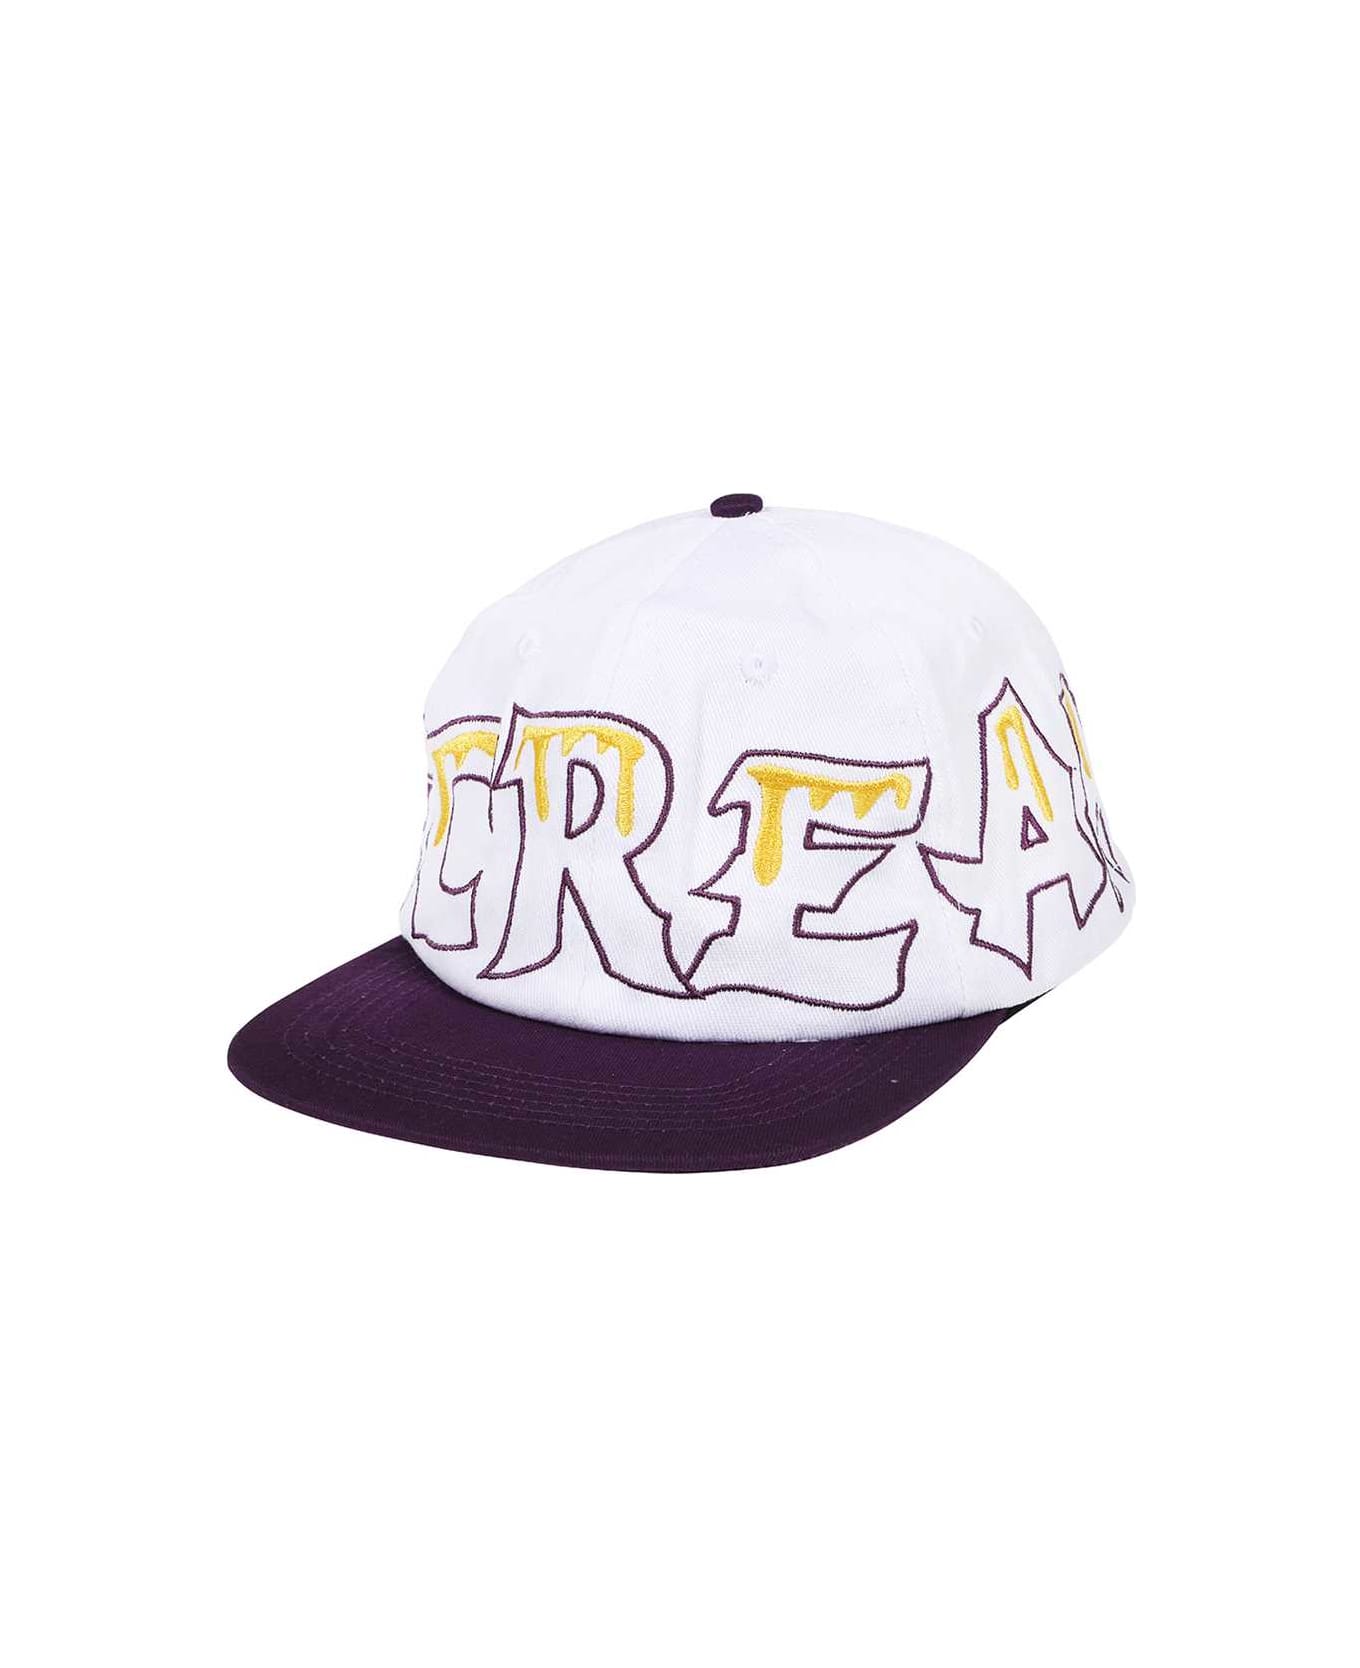 Icecream Baseball Hat With Flat Visor - White